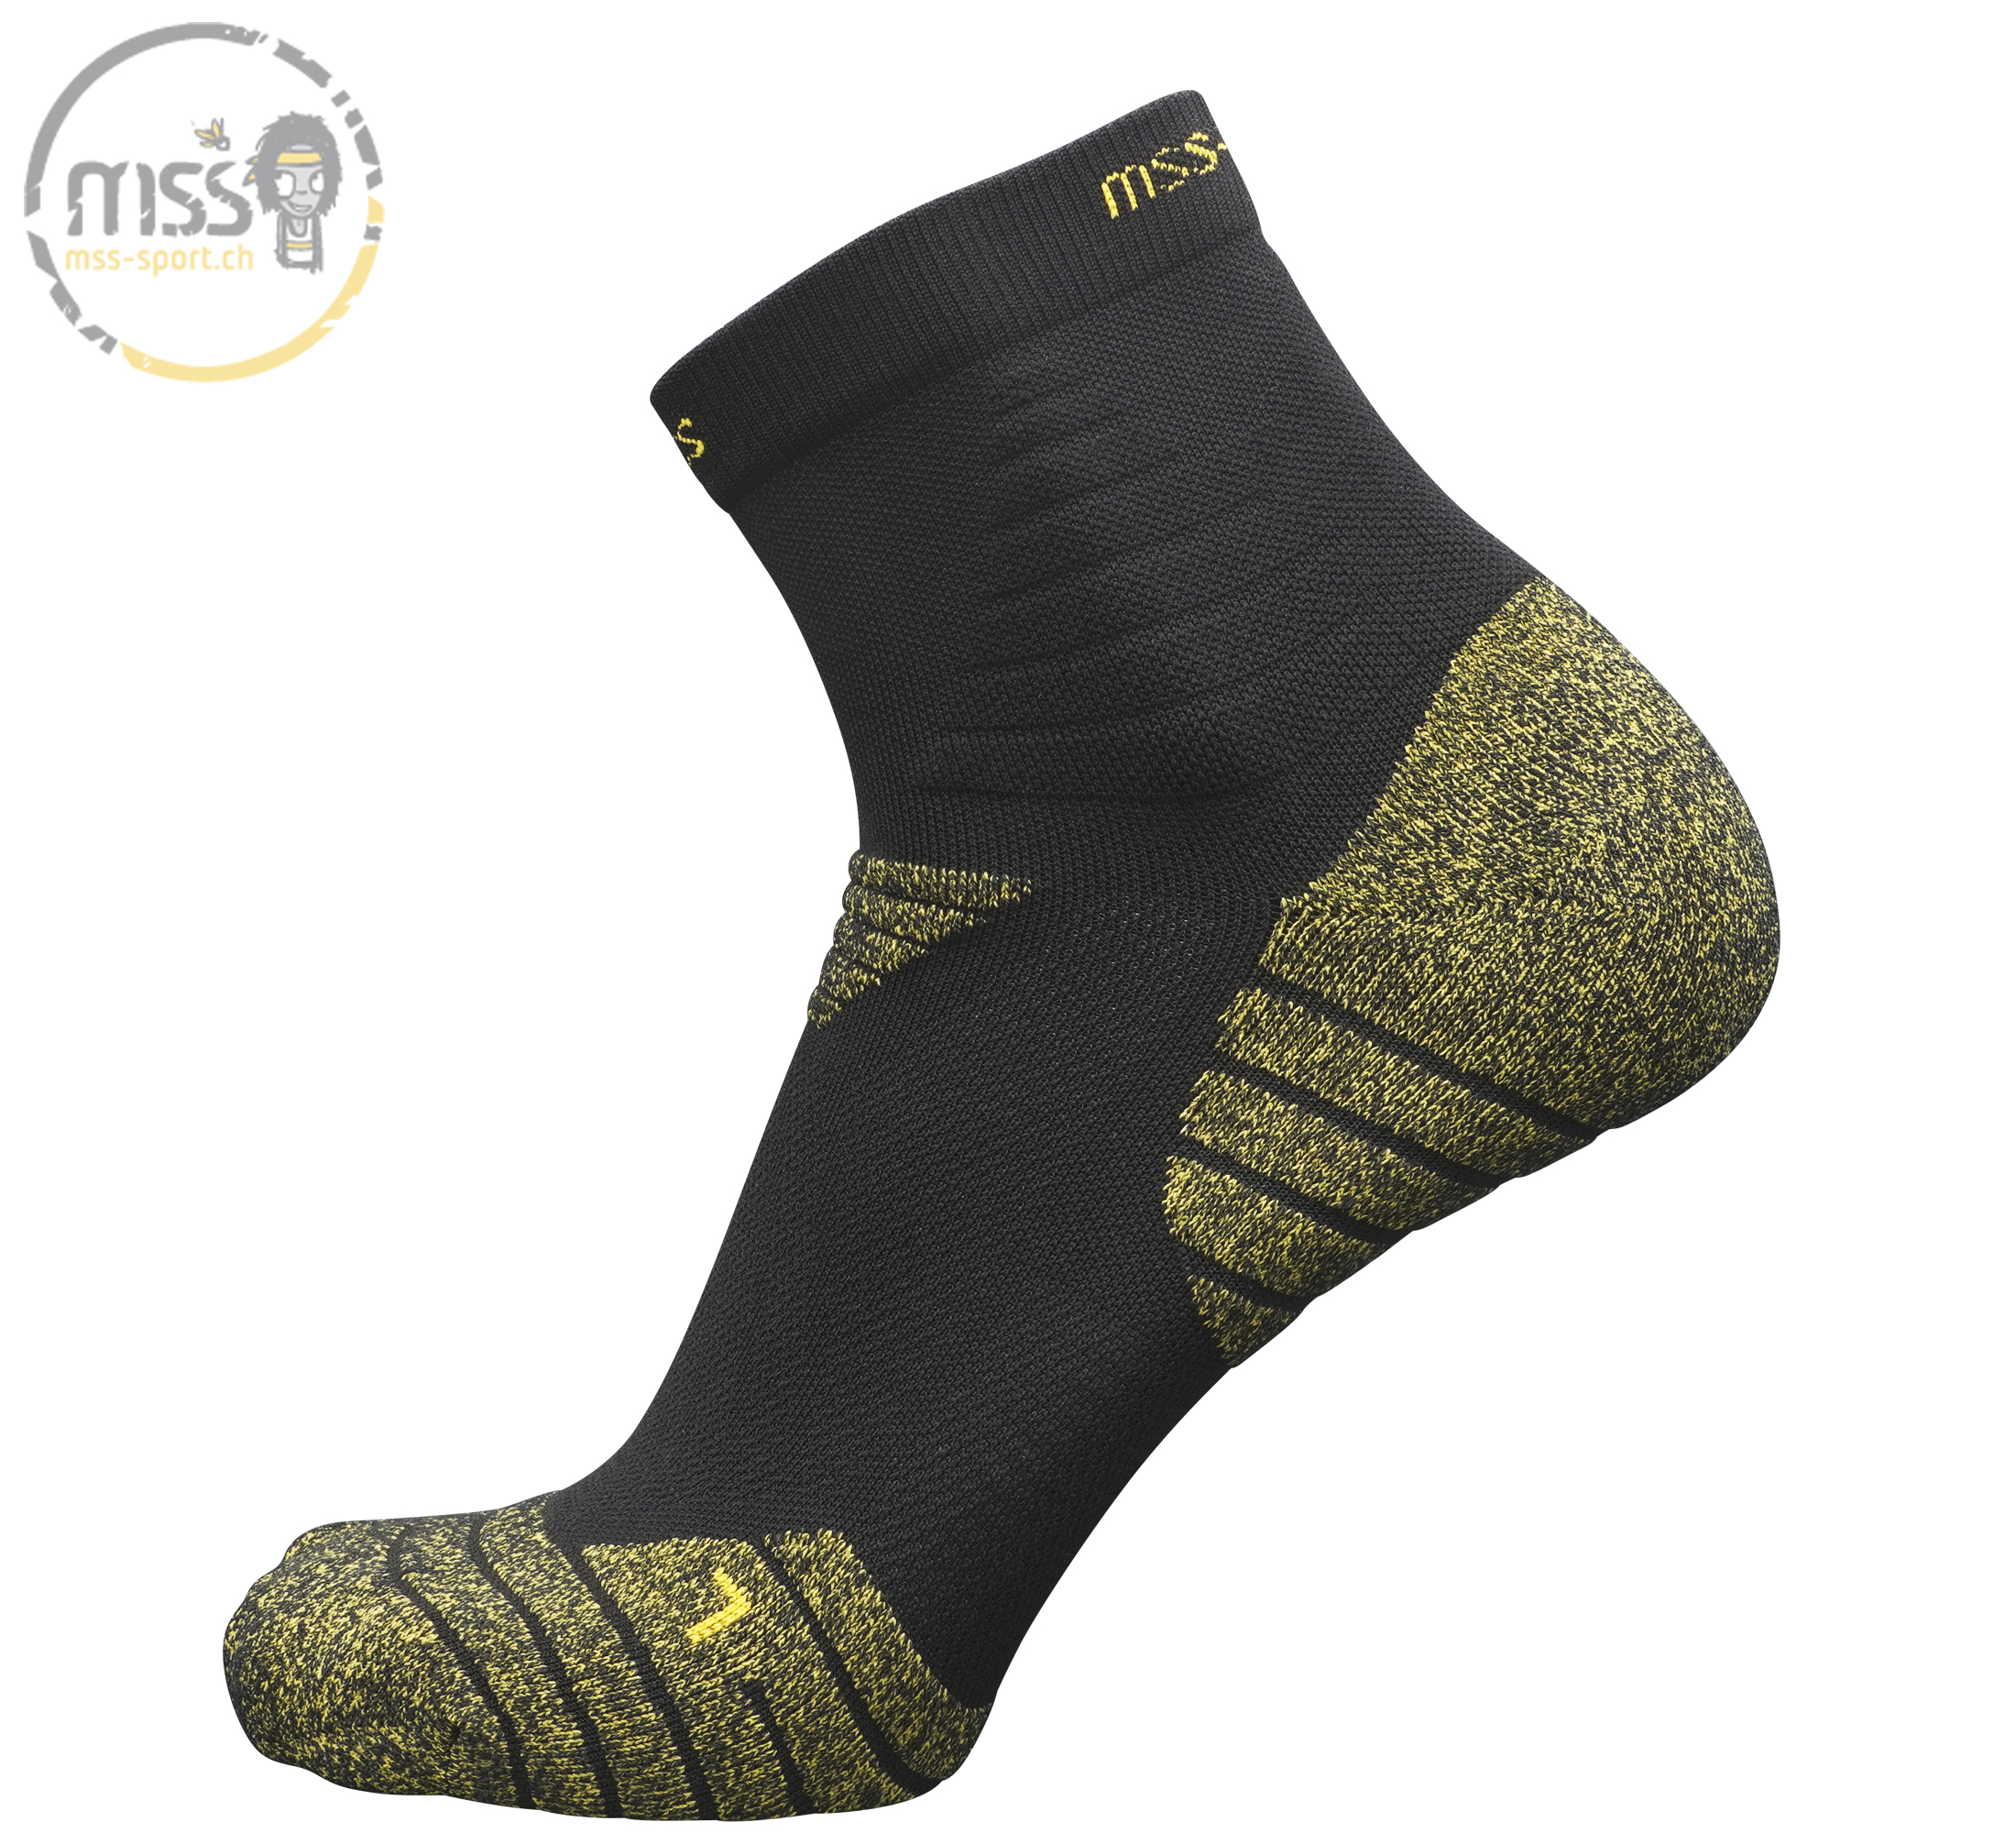 mss-socks GO 7500 MID black yellow